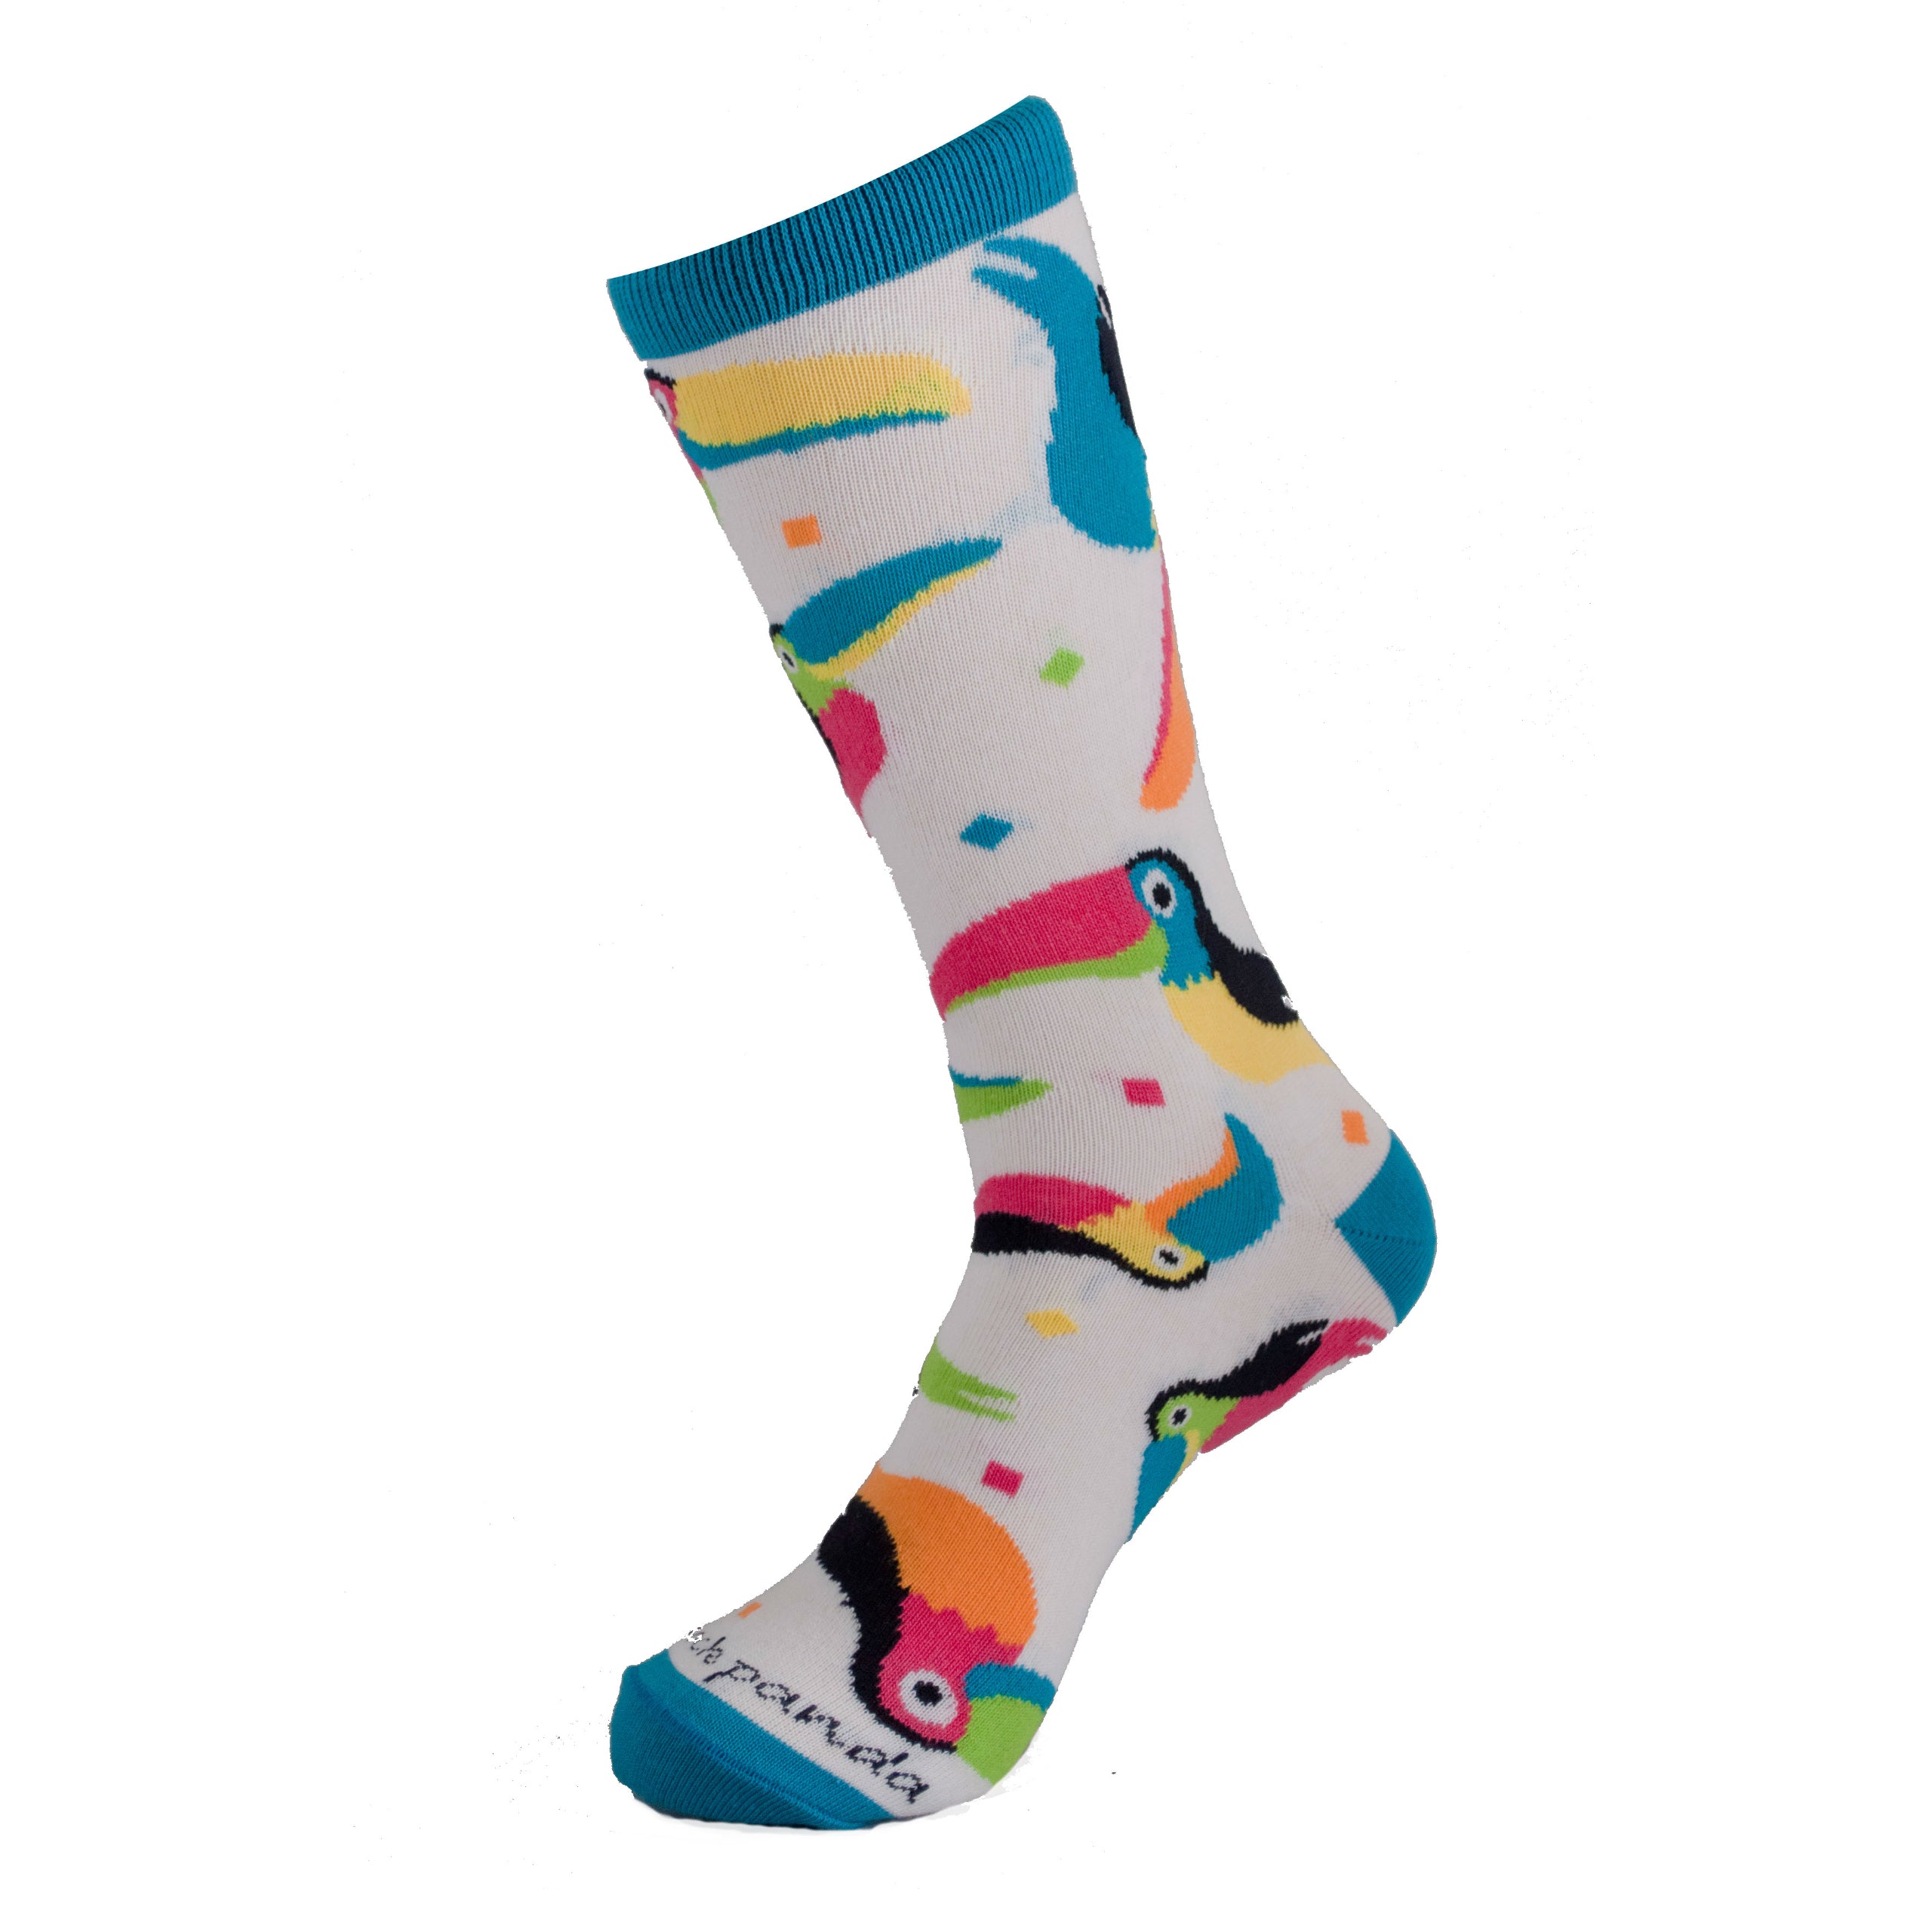 Colorful Toucan Pattern Socks for Tweens